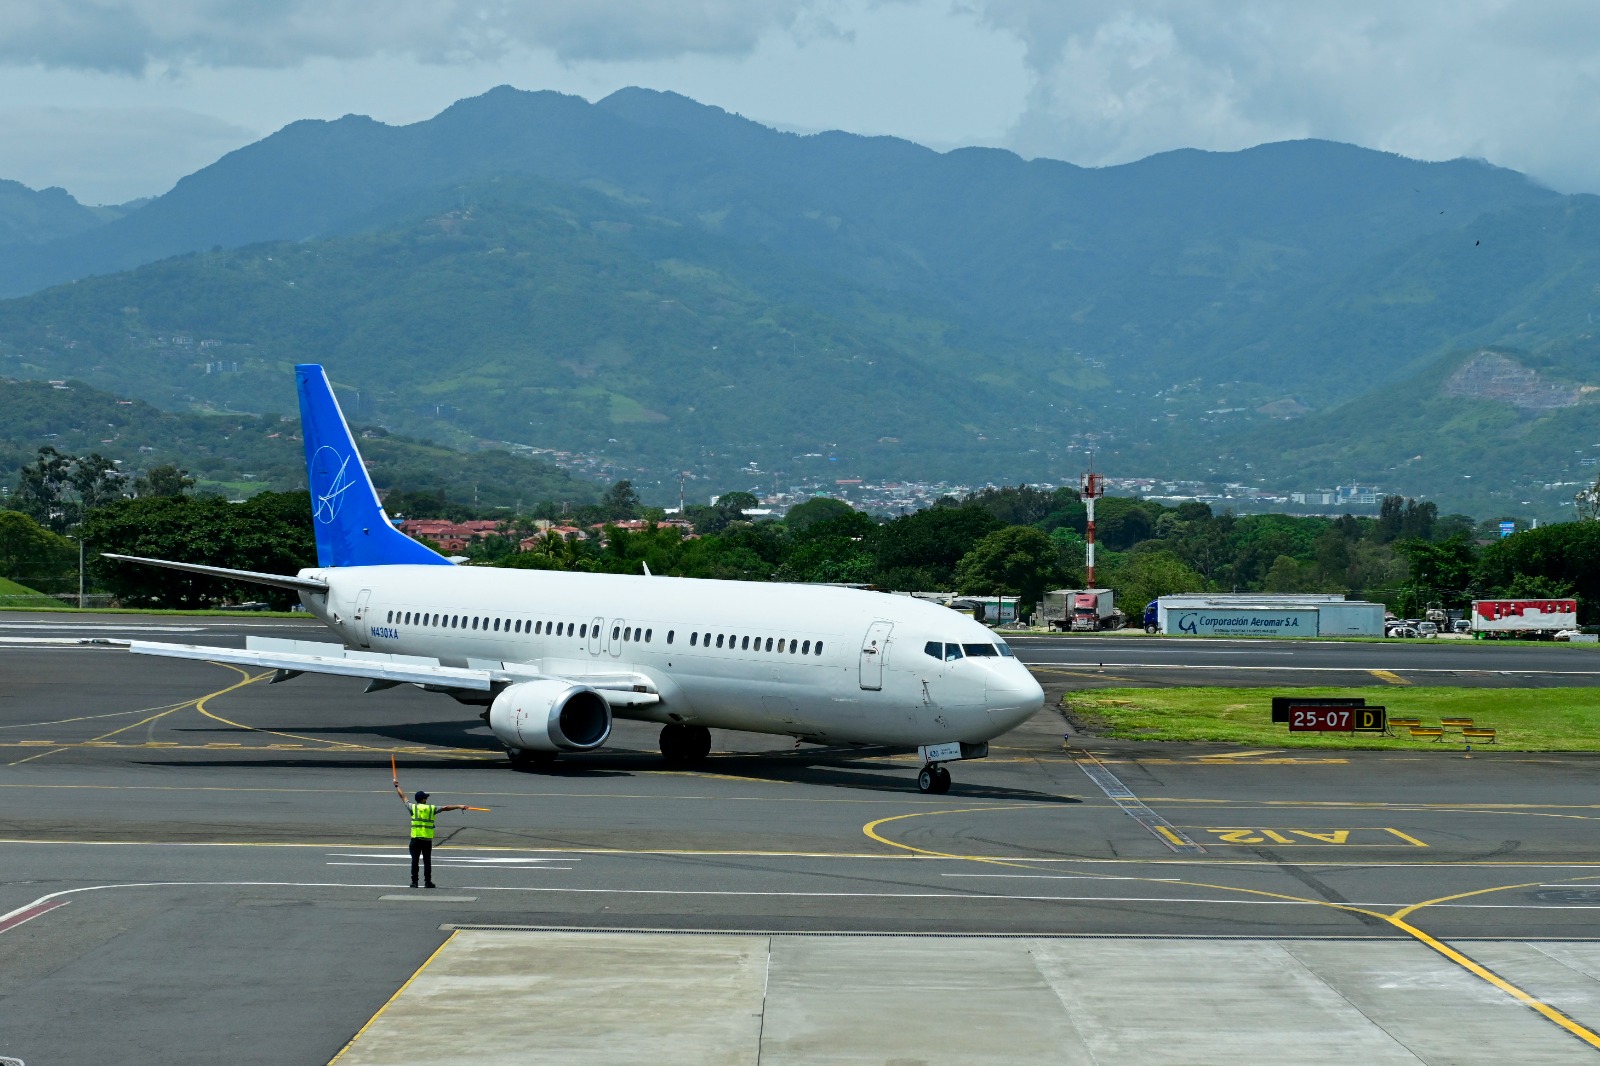 Inicia temporada de vuelos chárter desde Puerto Rico a Costa Rica